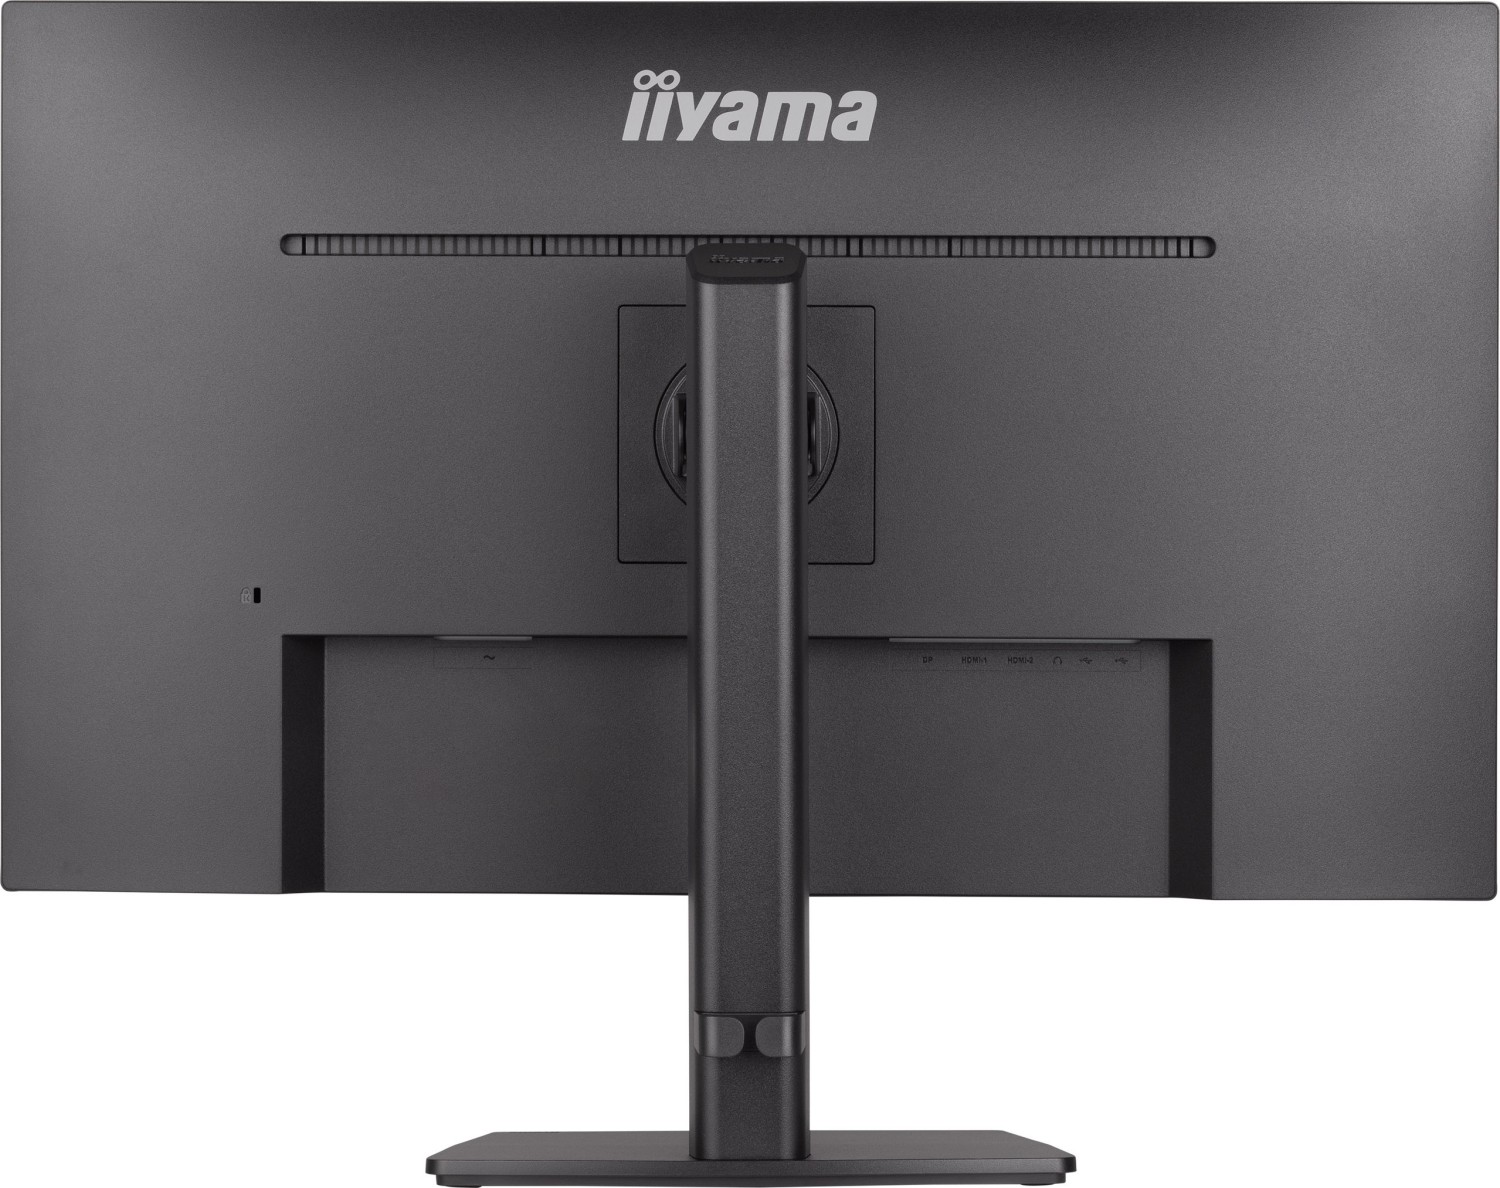 Iiyama ProLite XUB3294QSU-B1 LED-Monitor, 80cm (31.5"), schwarz TFT Monitor, 16:9, 80cm (31.5"), Auflösung: 2560x1440 Pixel, VESA Mount, verstellbarer Standfuß, 4ms, Helligkeit: 250cd, Blickwinkel: 178/178°(H/V), Kontrast: 3000:1, Anschluß: USB (2x, Host), Audio, Display-Port, HDMI, inkl.: Kabel (USB, HDMI, Display Port), Netzteil, Netzkabel (EU, UK), Farbe: schwarz [Energieklasse G] (XUB3294QSU-B1)